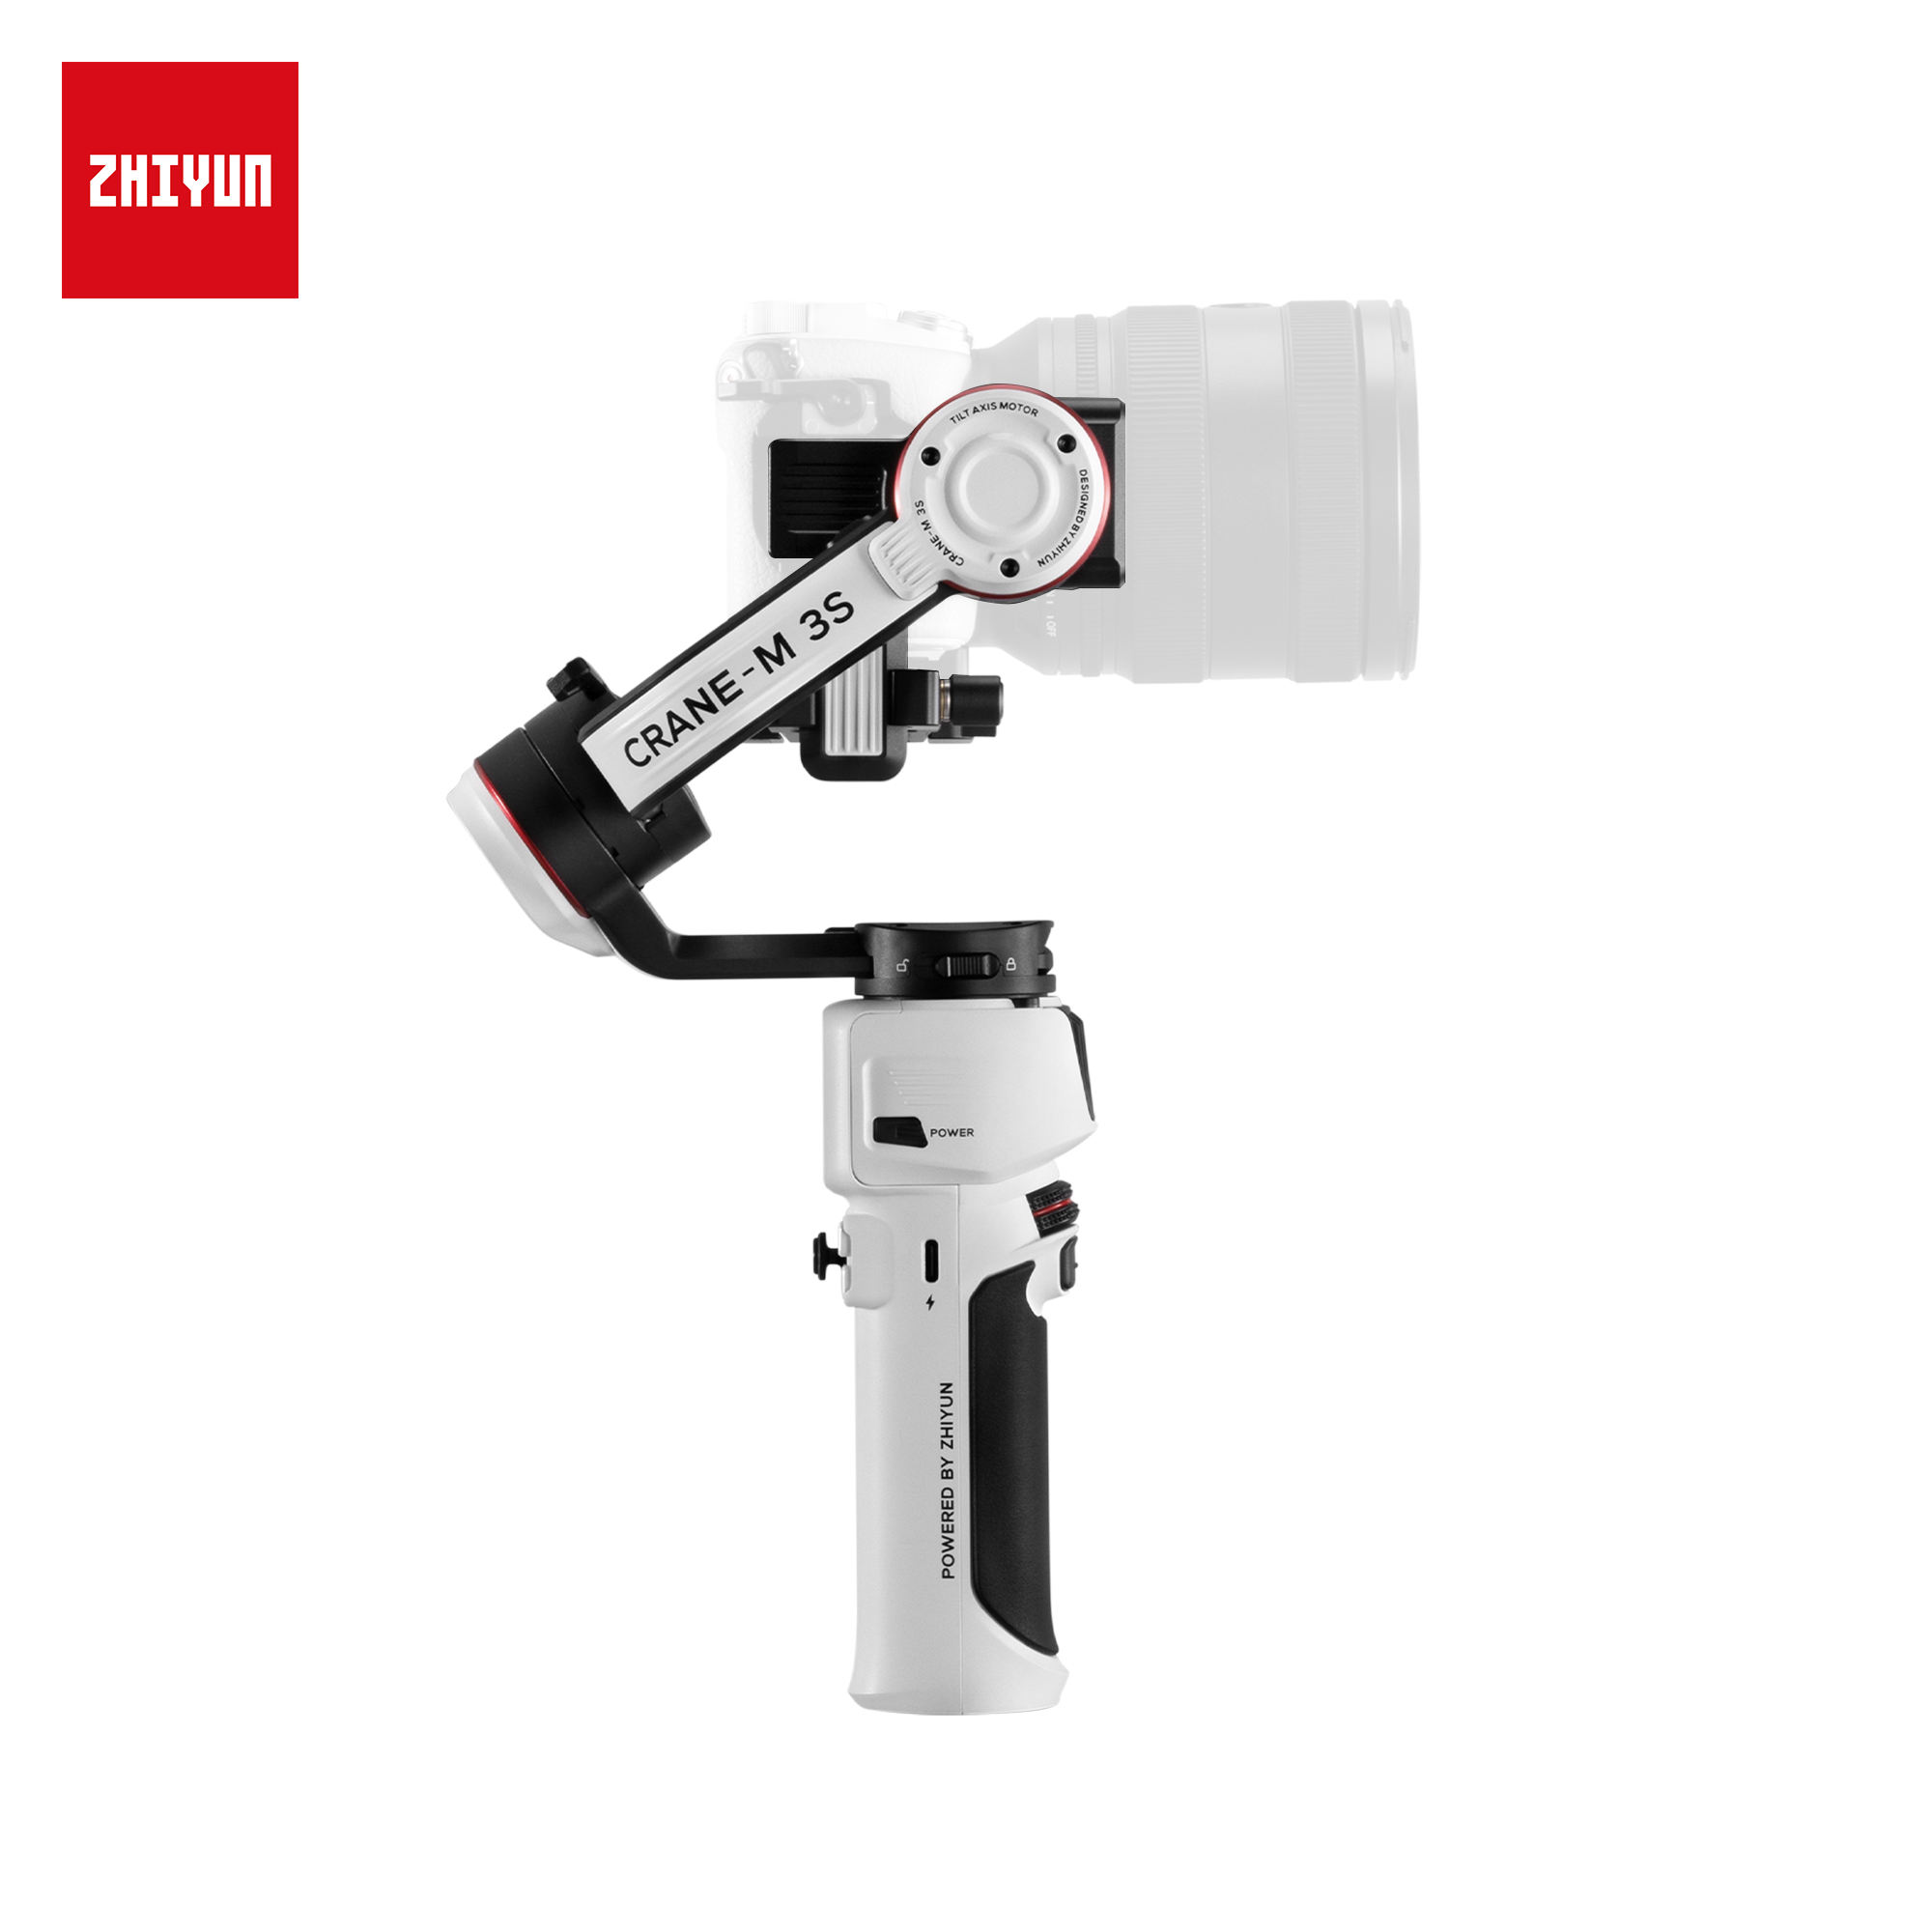 ZHIYUN Crane M3S カメラ ジンバル スタビライザー 3軸 フルサイズ一眼レフカメラ 携帯電話 コンパクトデジタルカメラ 防振 手元ジンバル スタビライザー  スマートフォンと互換性あり